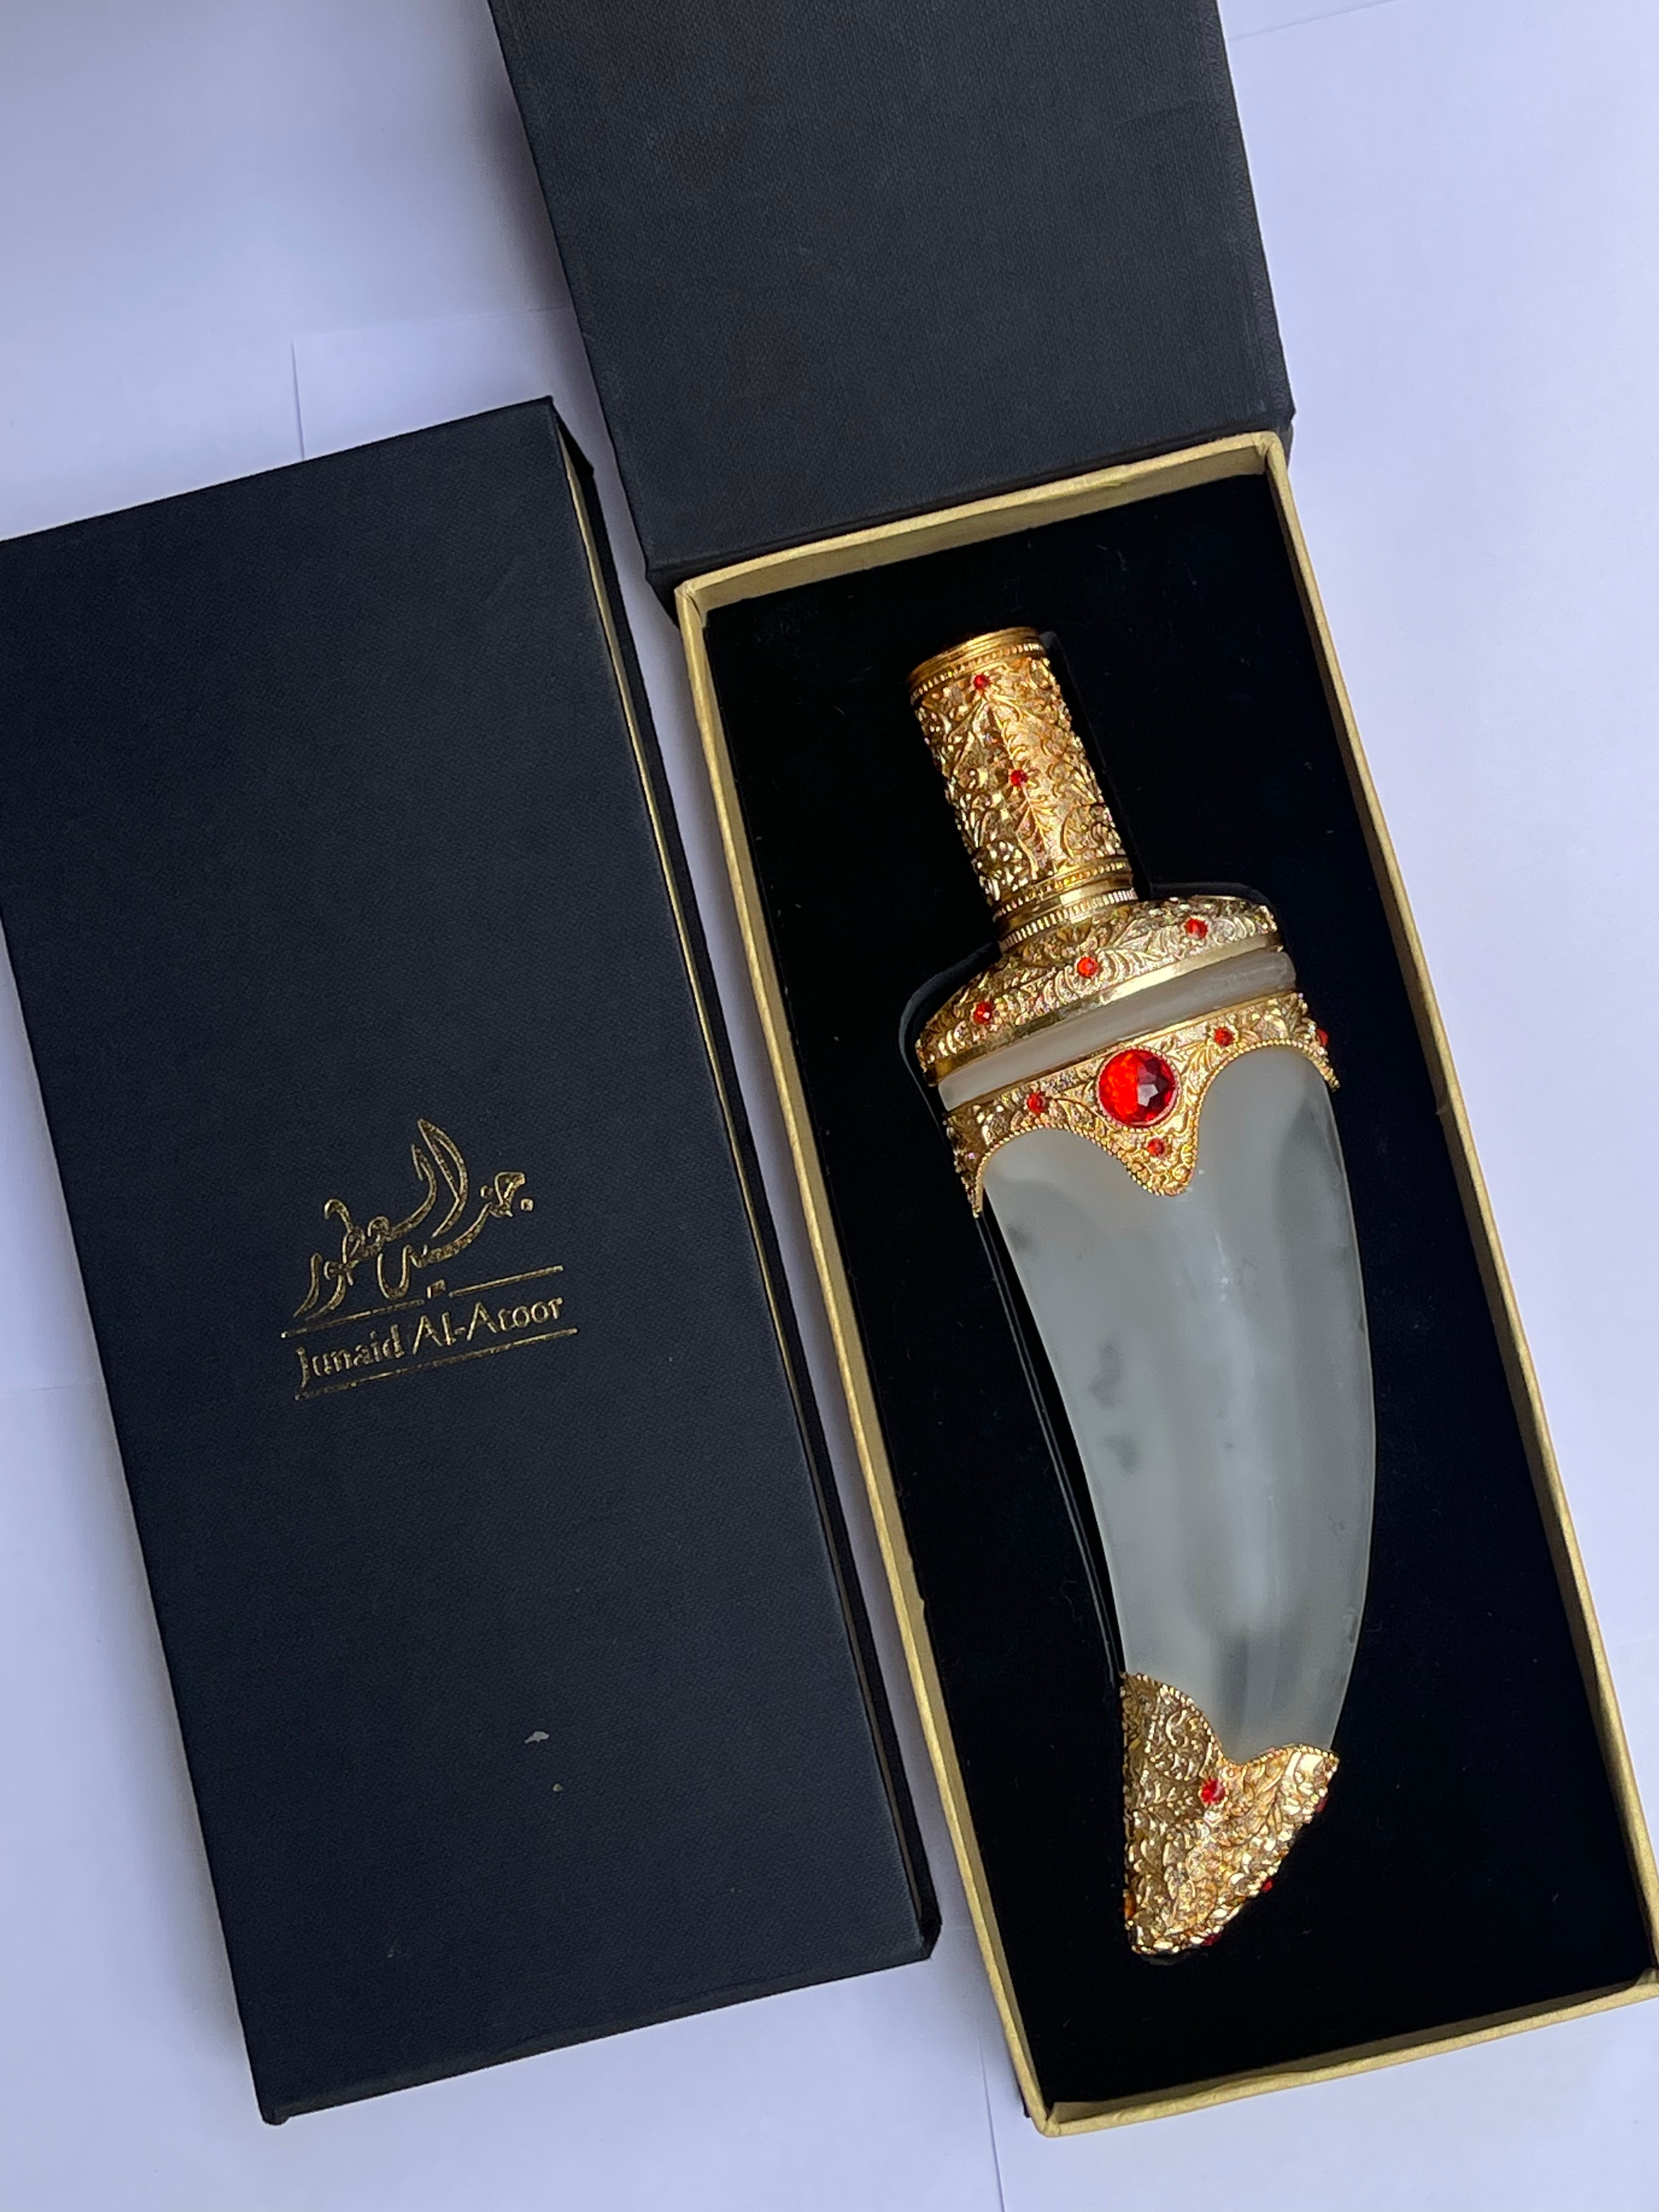 Junaid Al Atoor Khanjar Perfume 40ml